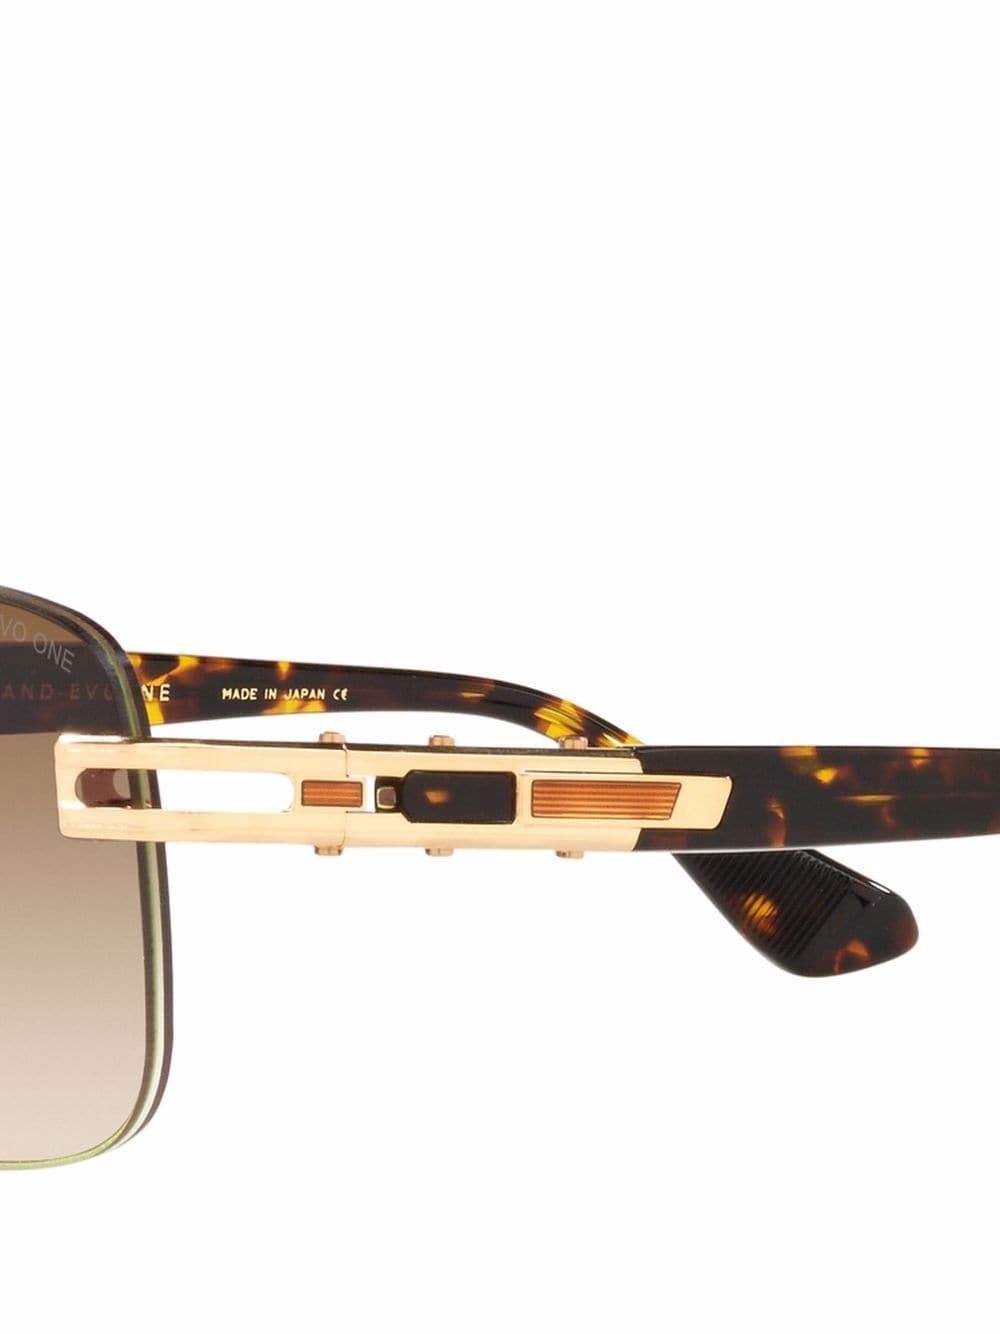 Grand-Evo One sunglasses - 3